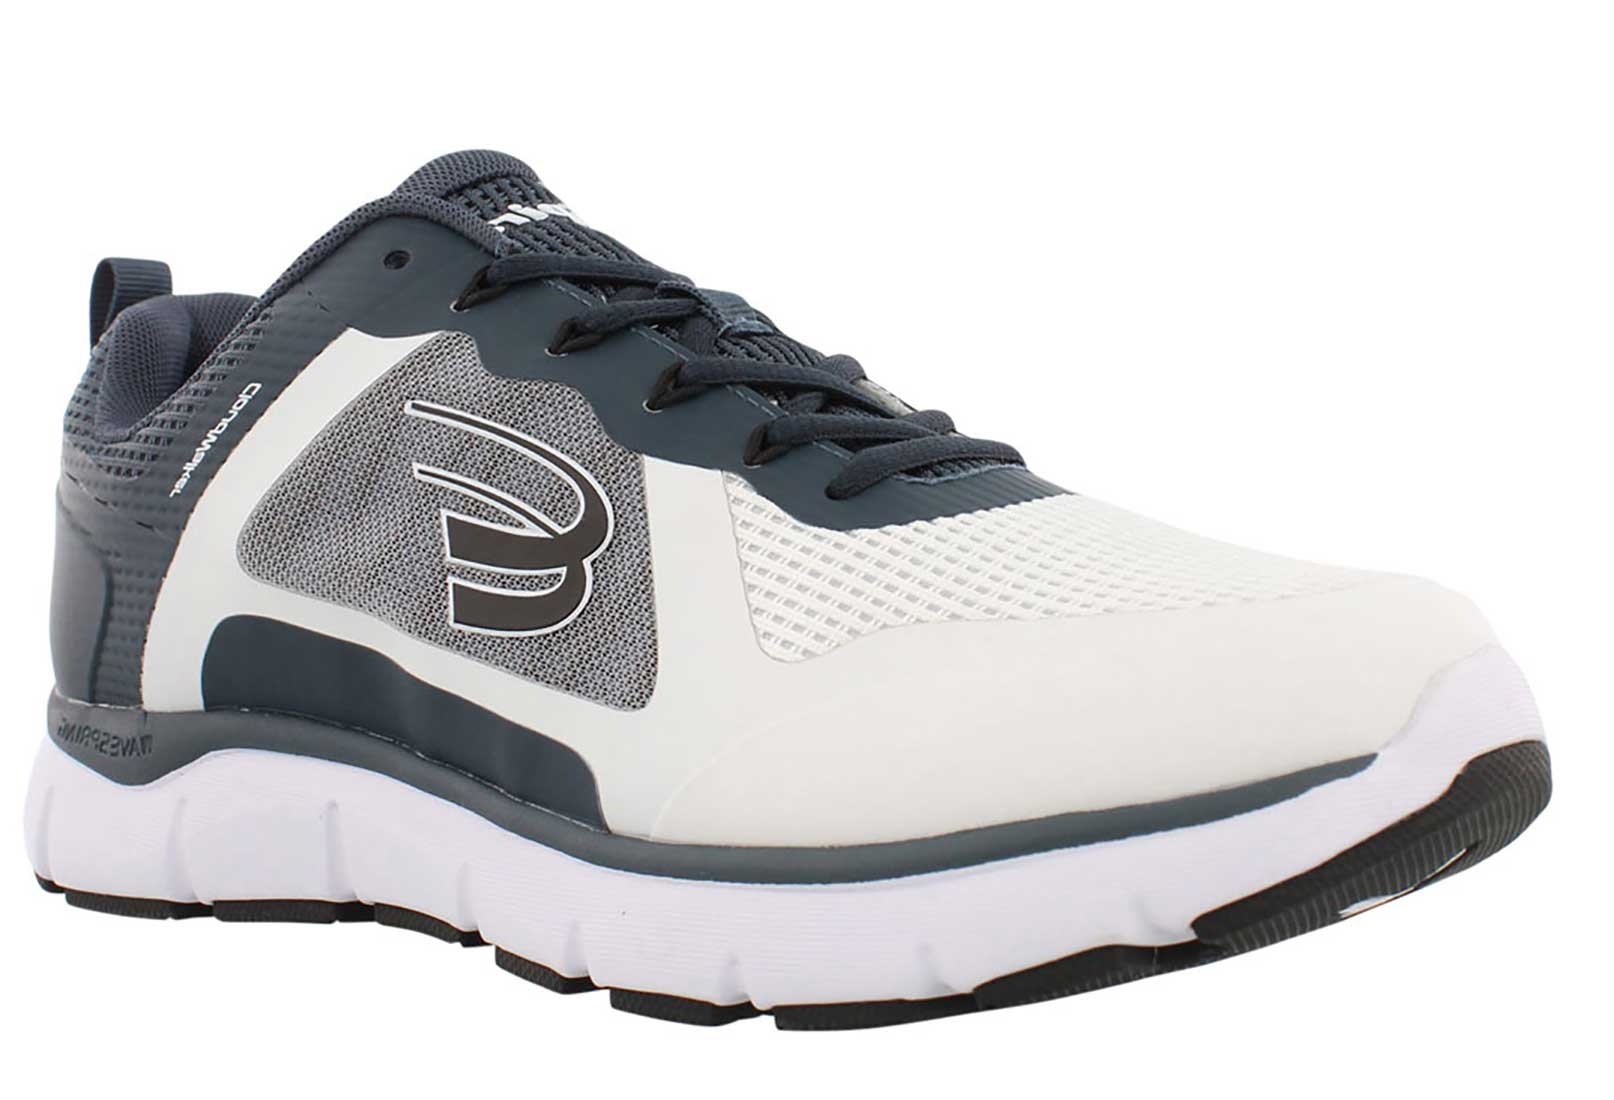 Spira Men's CloudWalker SCLD121 Walking Shoe - Men's Athletic Extra Depth Shoe